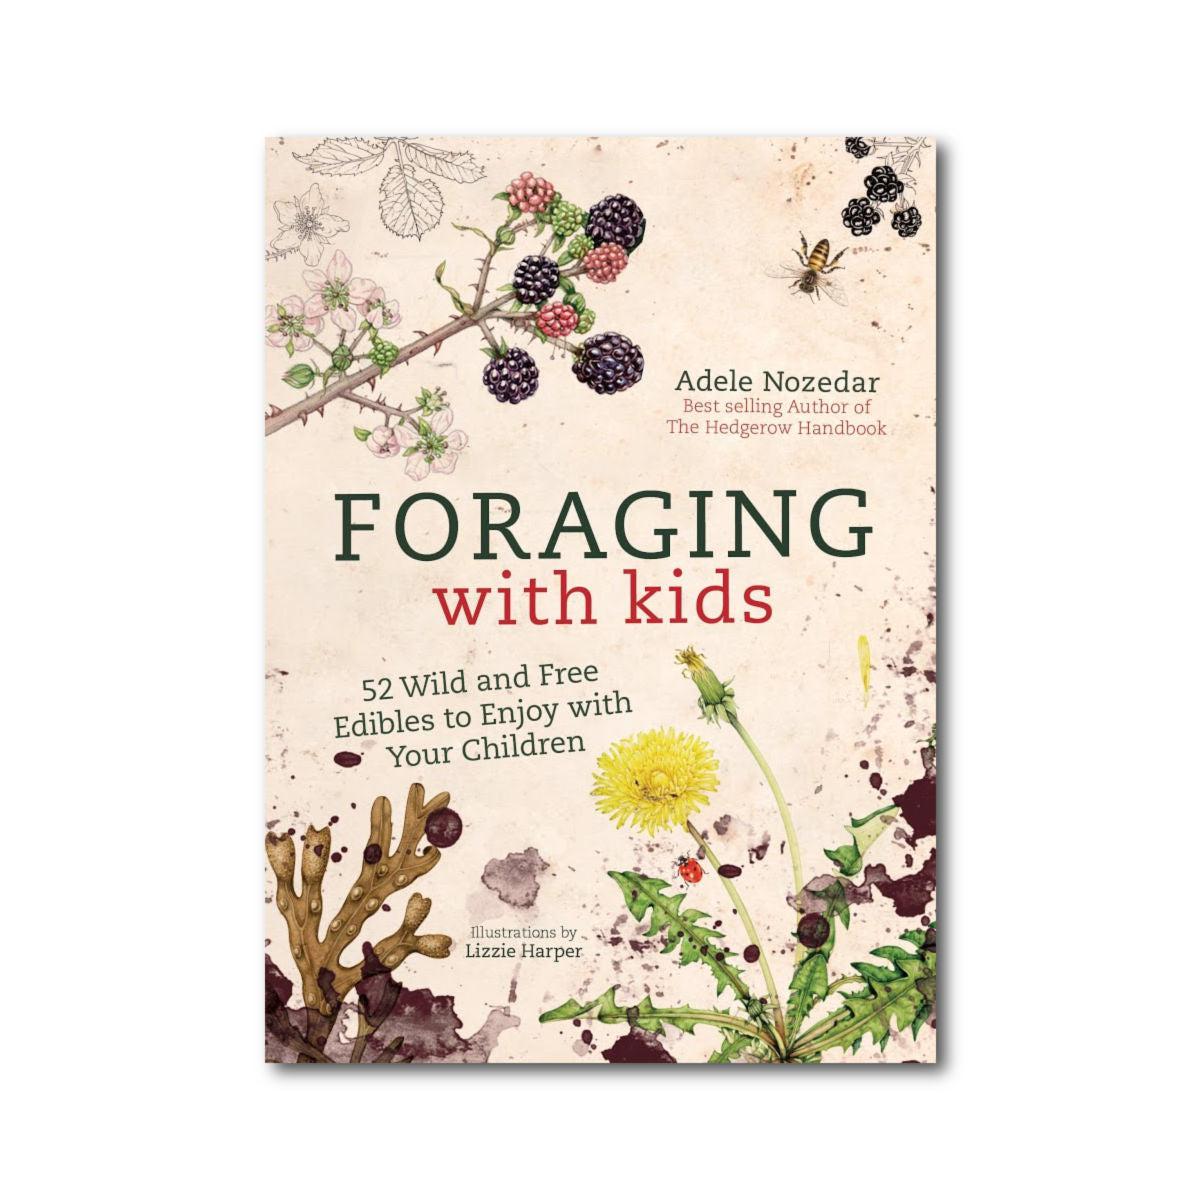 Foraging with kids book by Adele Nozedar